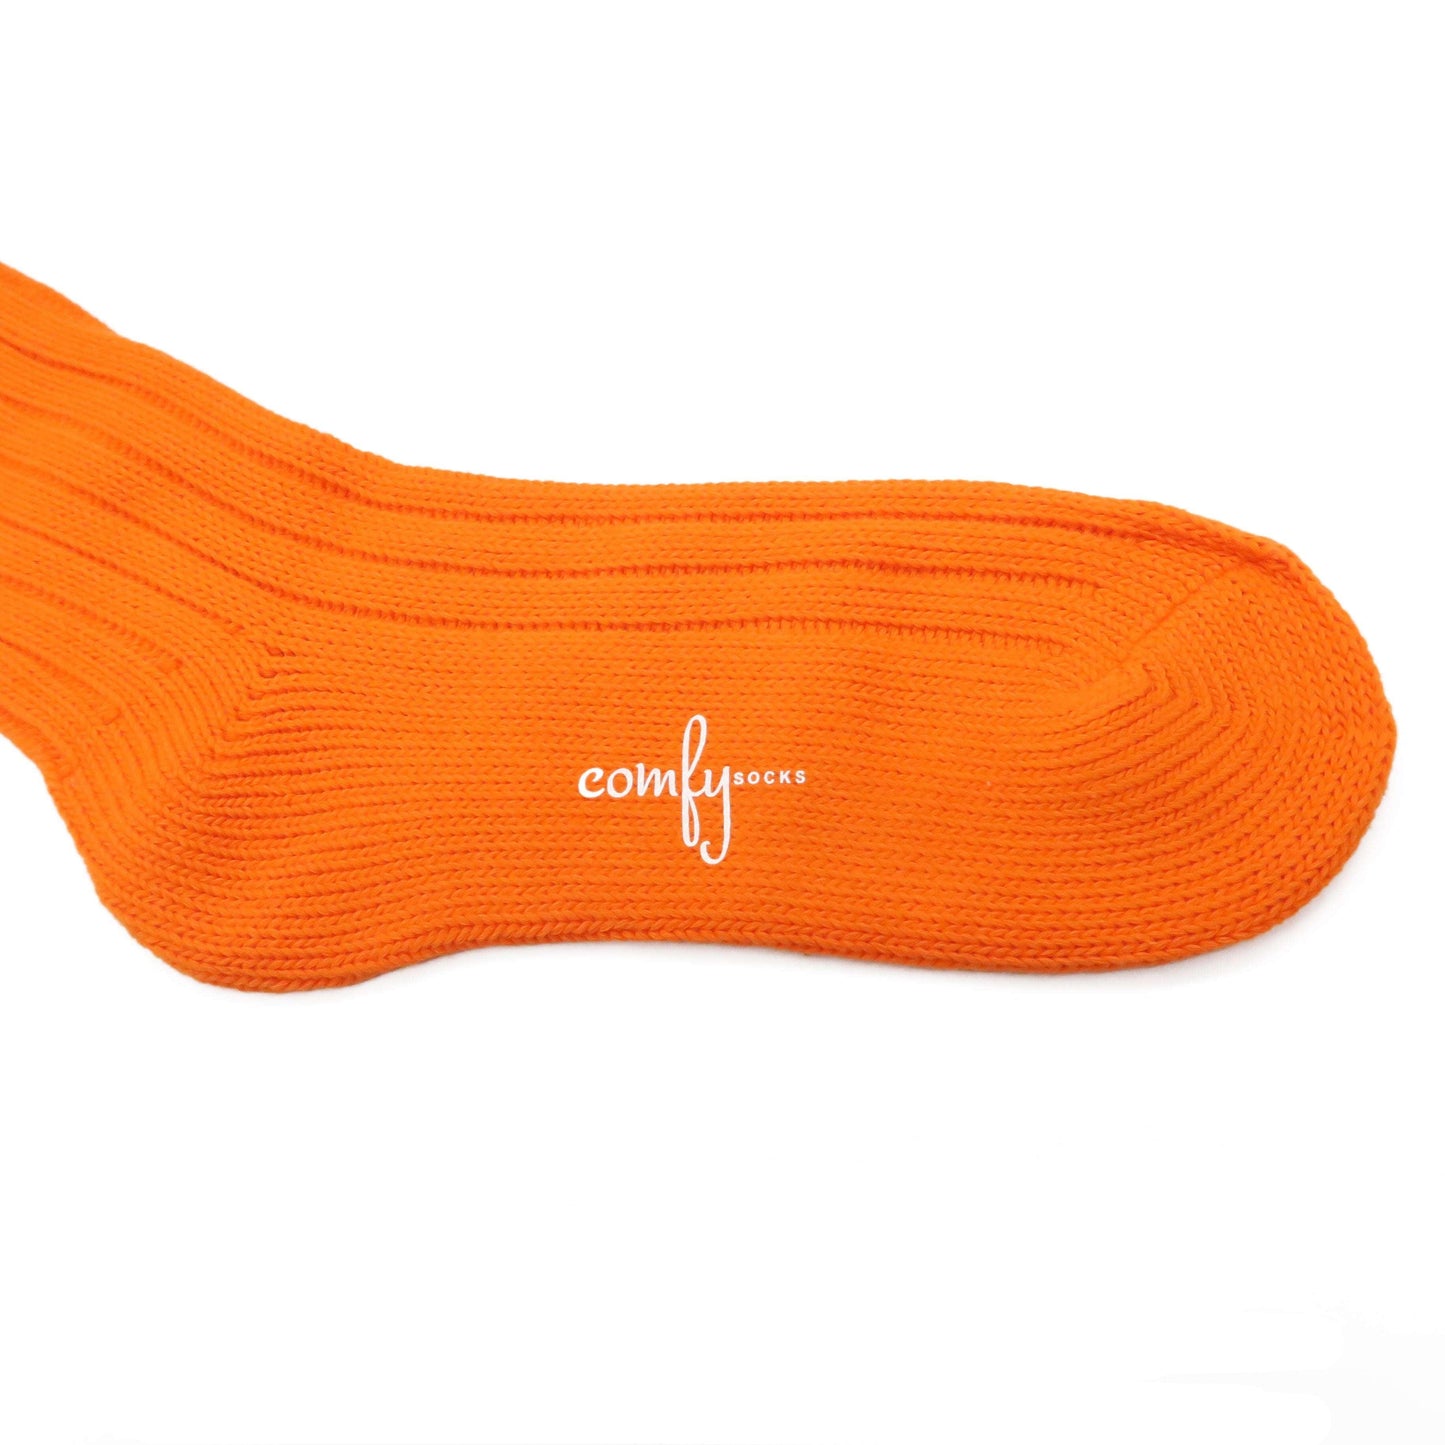 Alfred knitted neon orange socks - Comfysocks